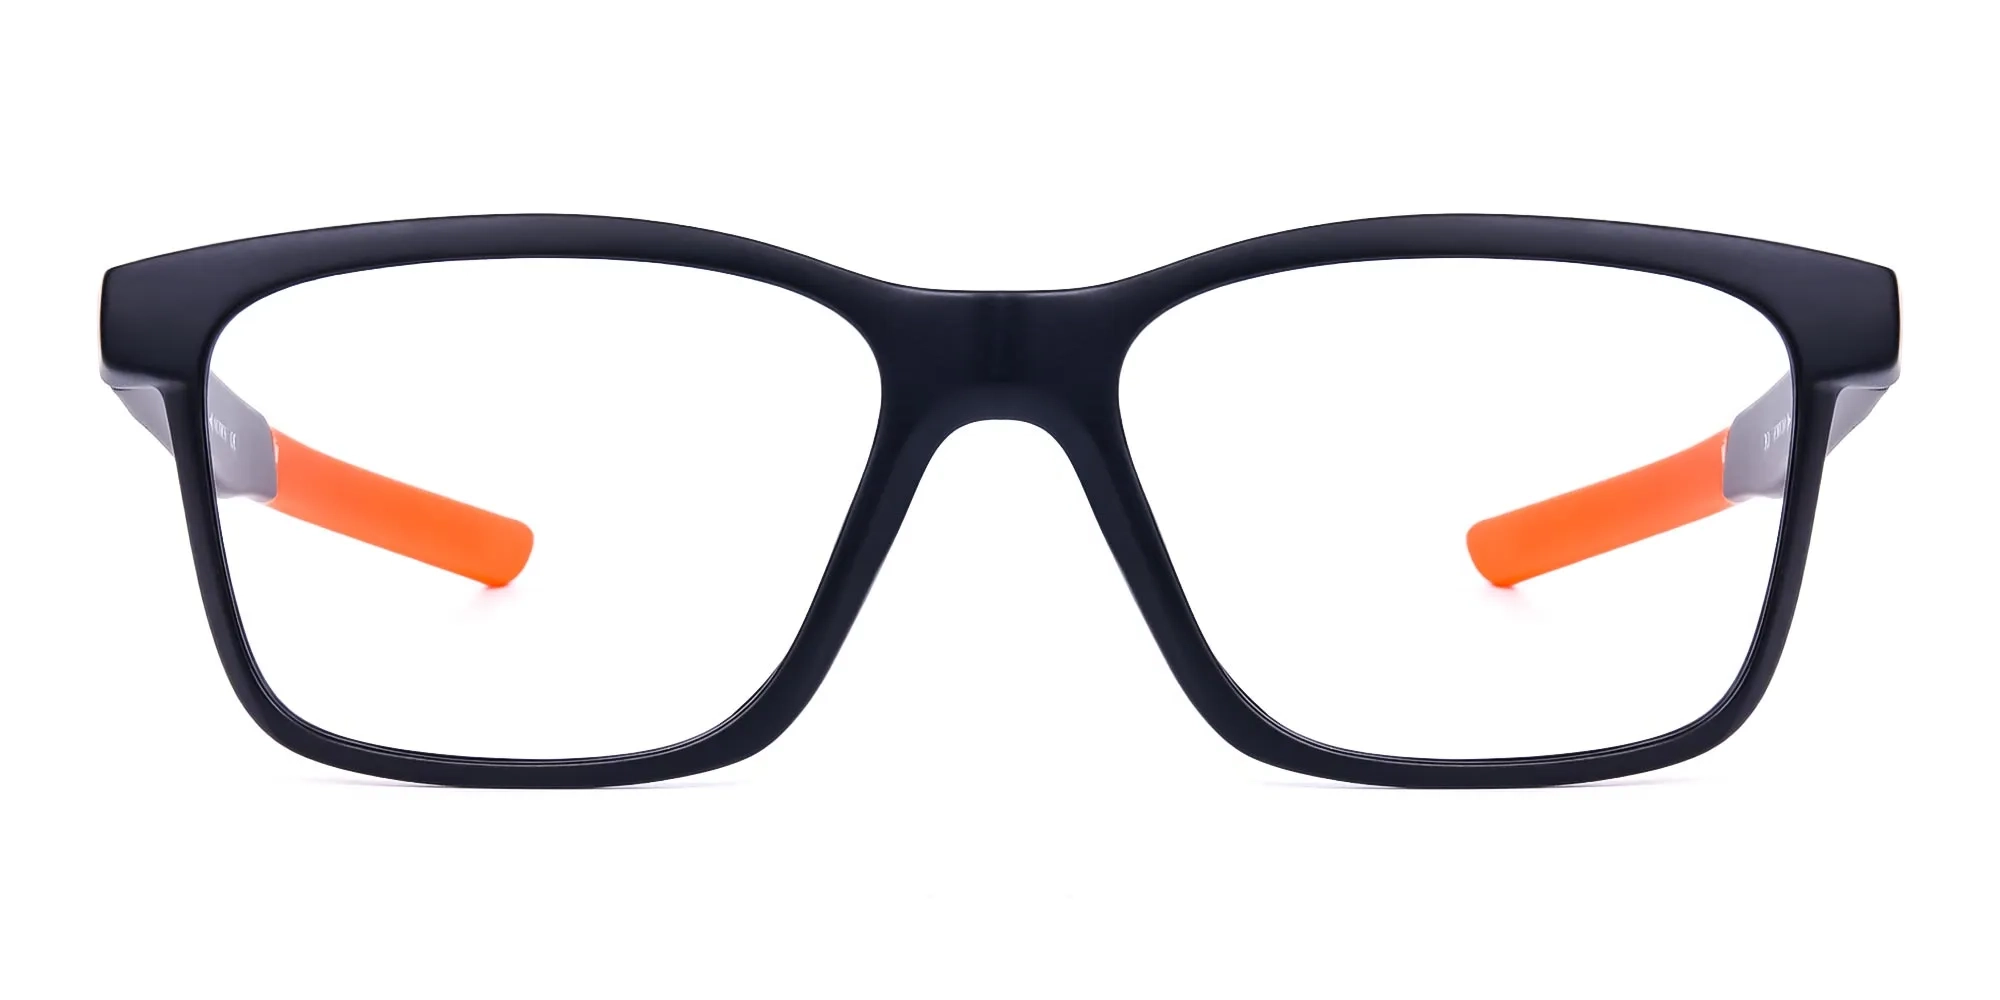 Black and Orange Golf Glasses